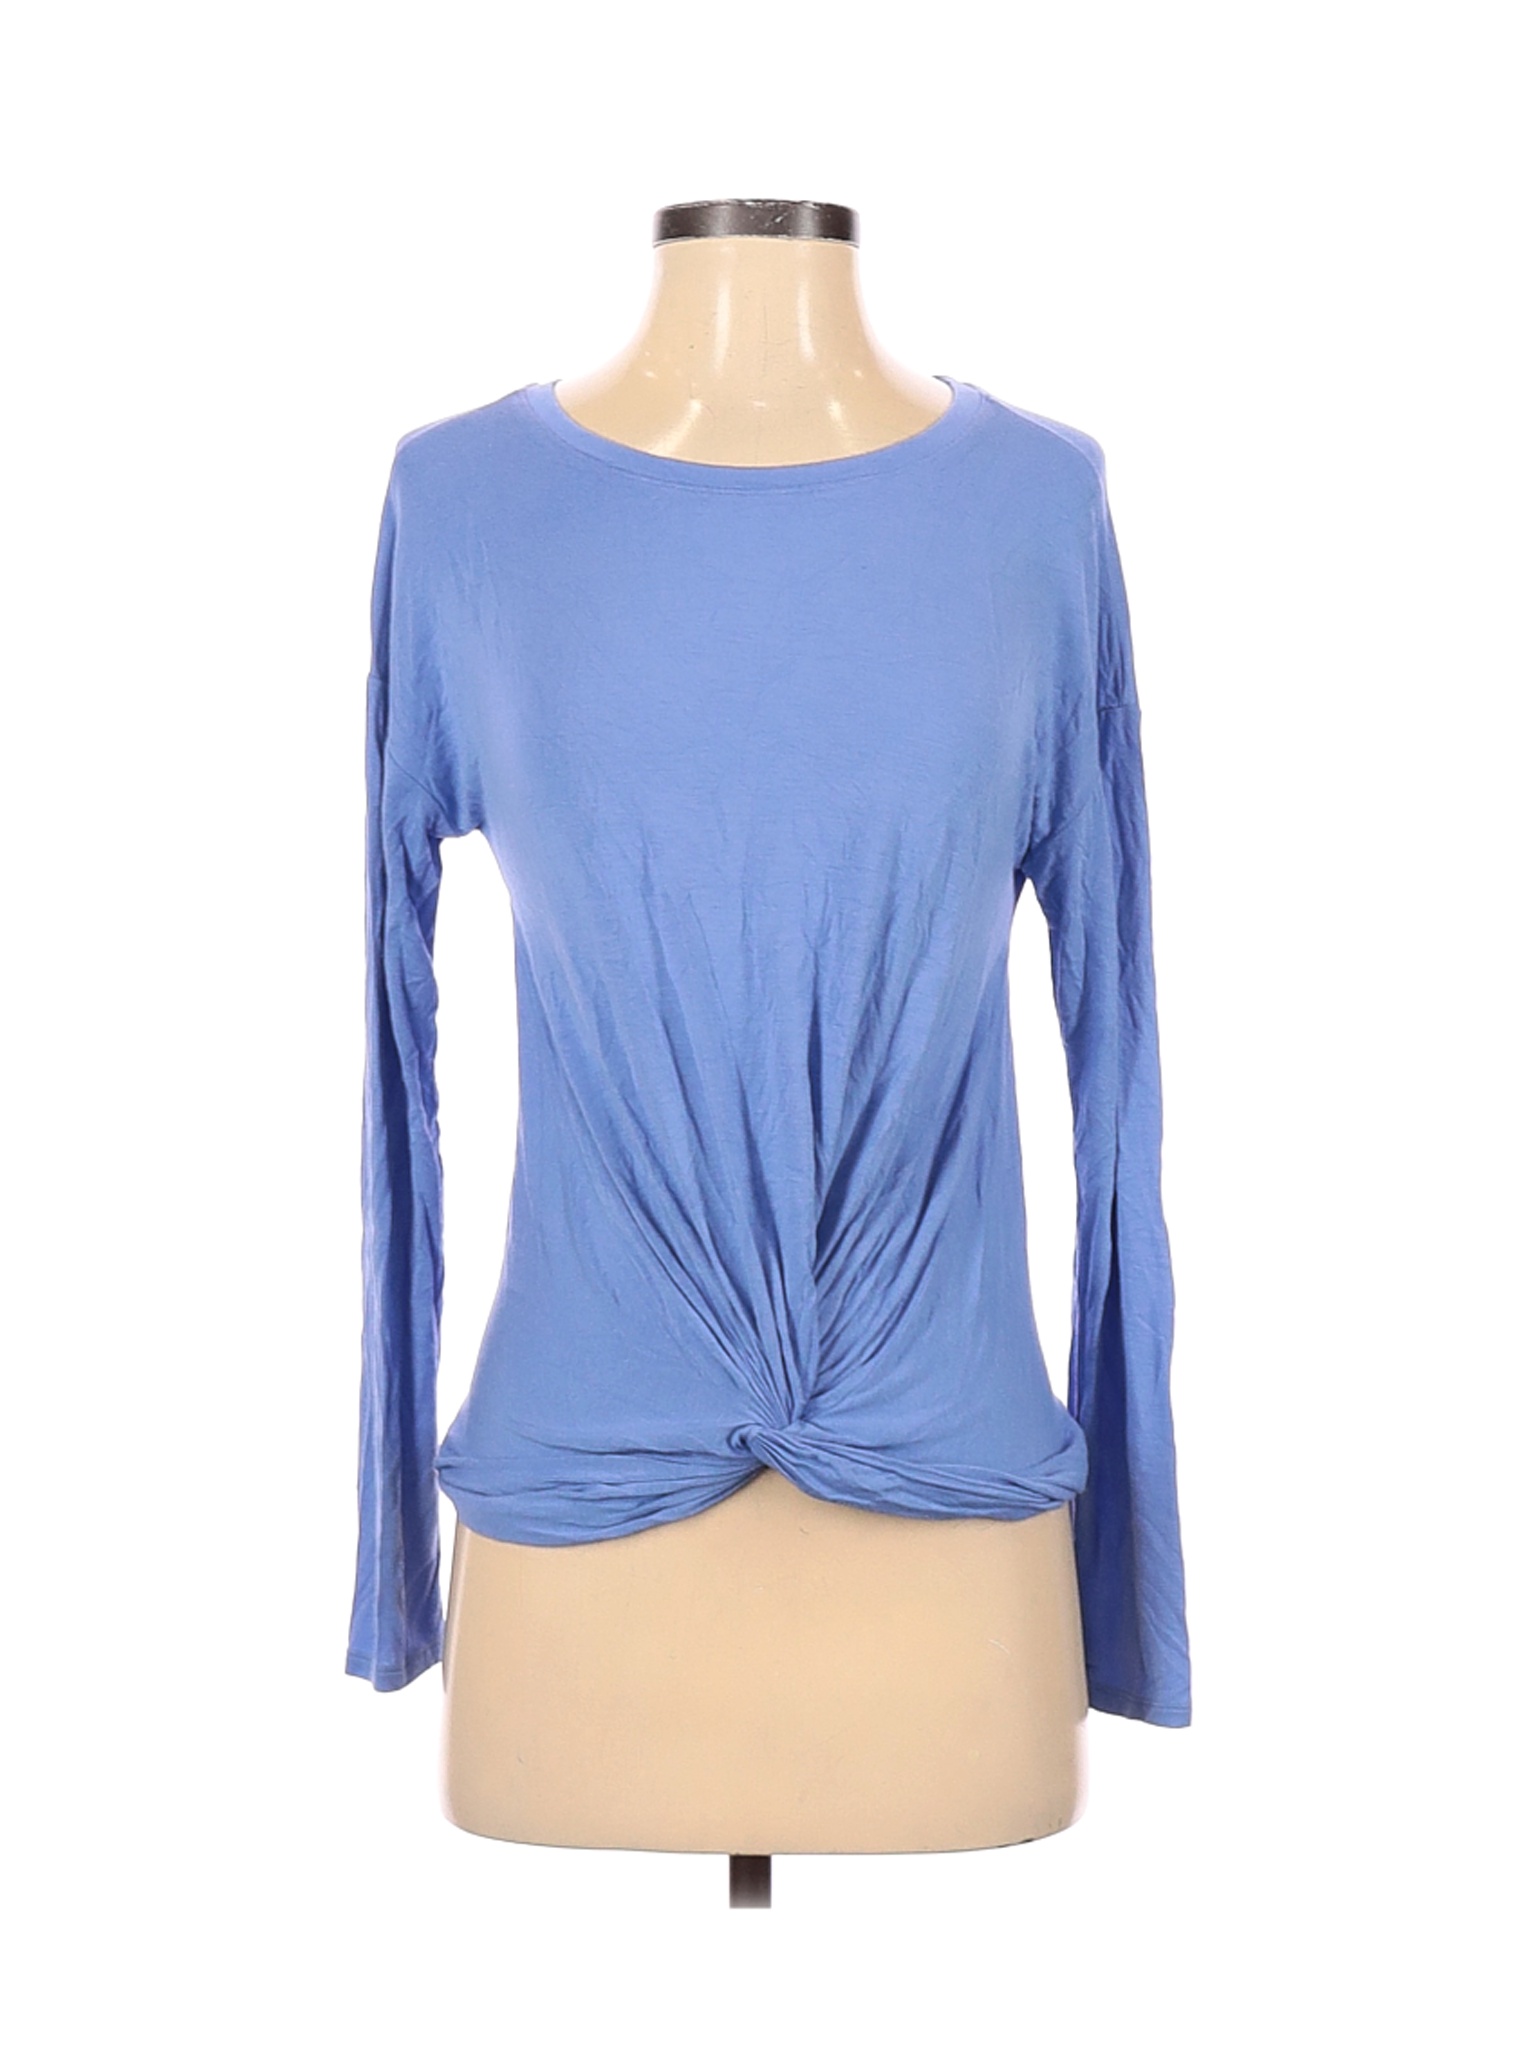 Cupio Women Blue Long Sleeve Top S | eBay